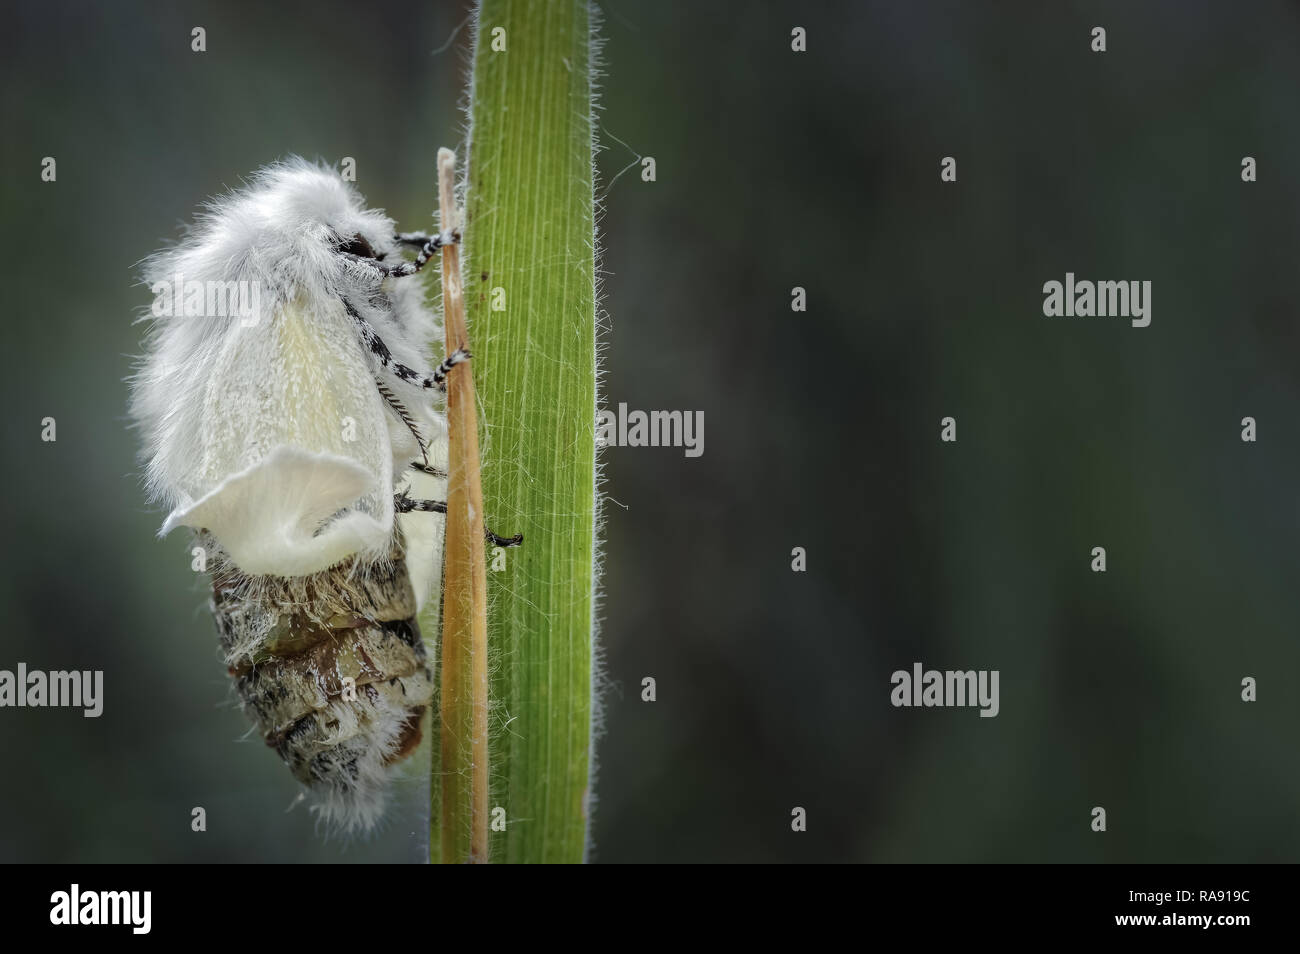 This image was taken locally at Ainsdale LNR where the White Satin (Leucoma salicis) moth feeds, mates and lays eggs on the dwarf willow scrub. Stock Photo